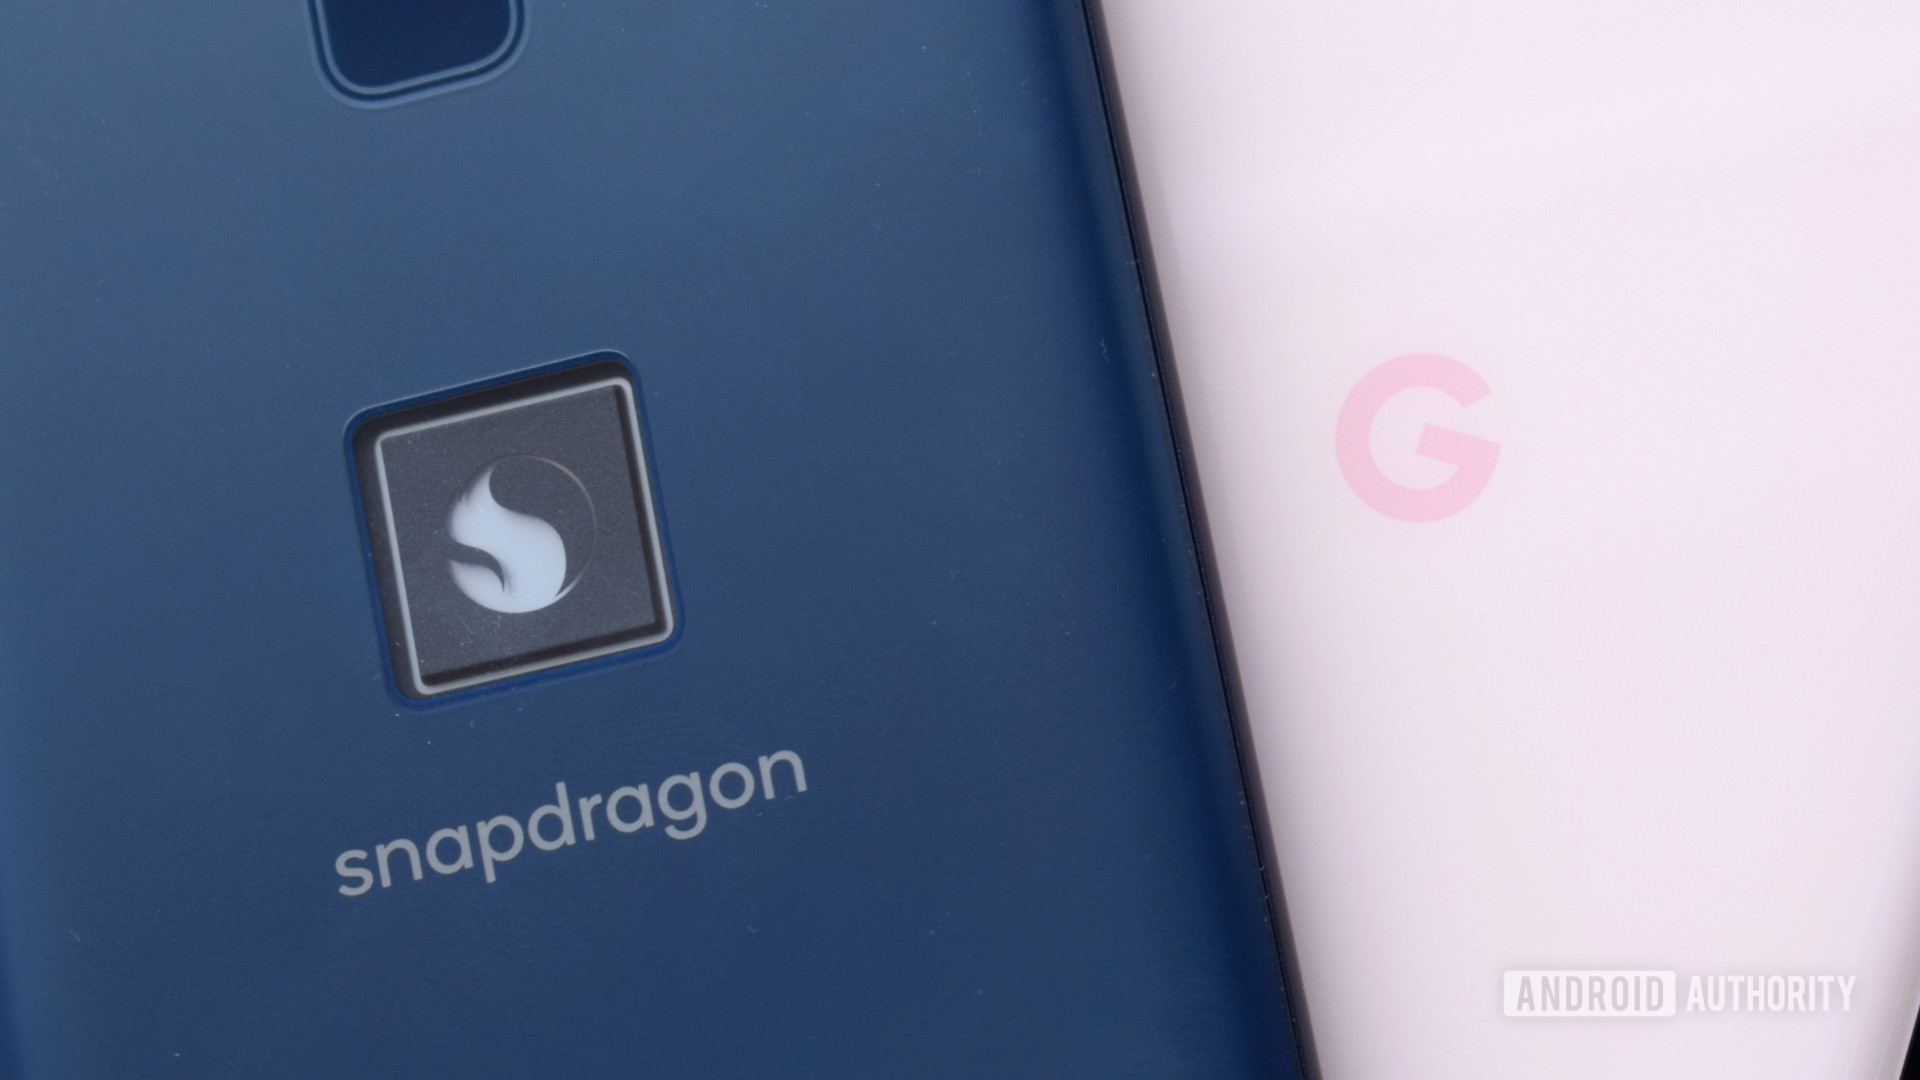 Google vs Snapdragon logos